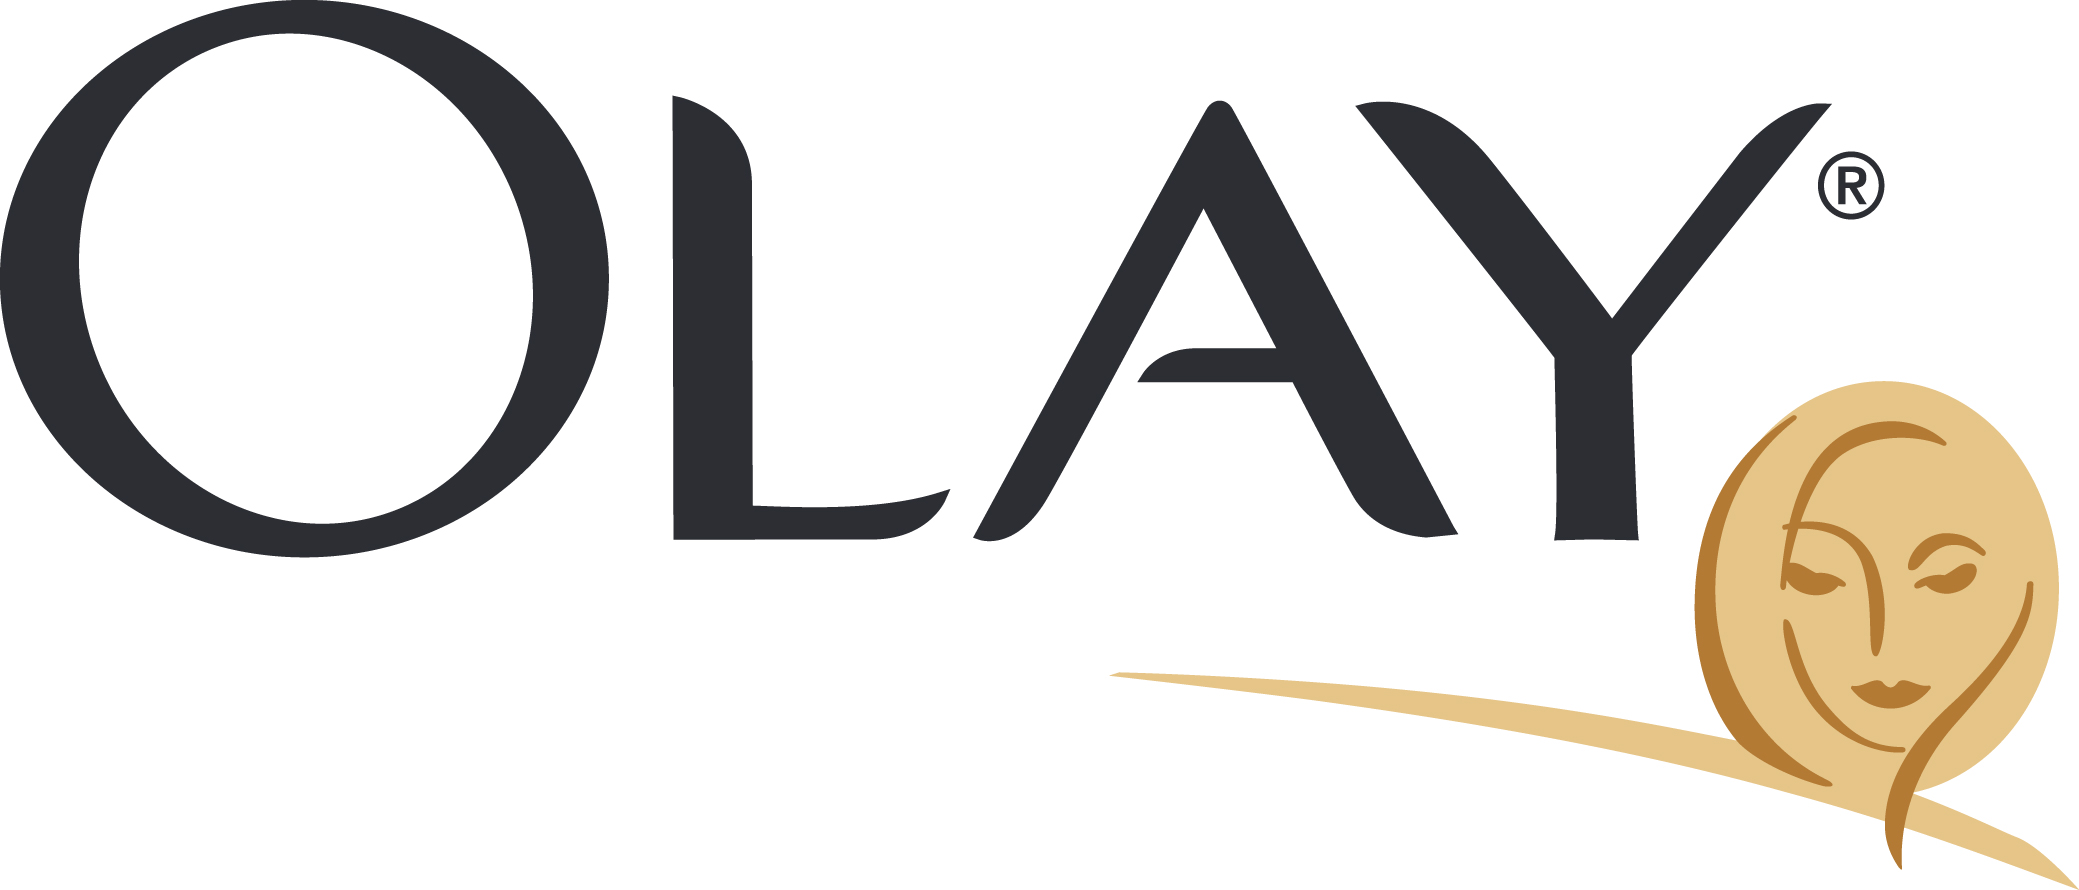 Olay - Logopedia, the logo and branding site